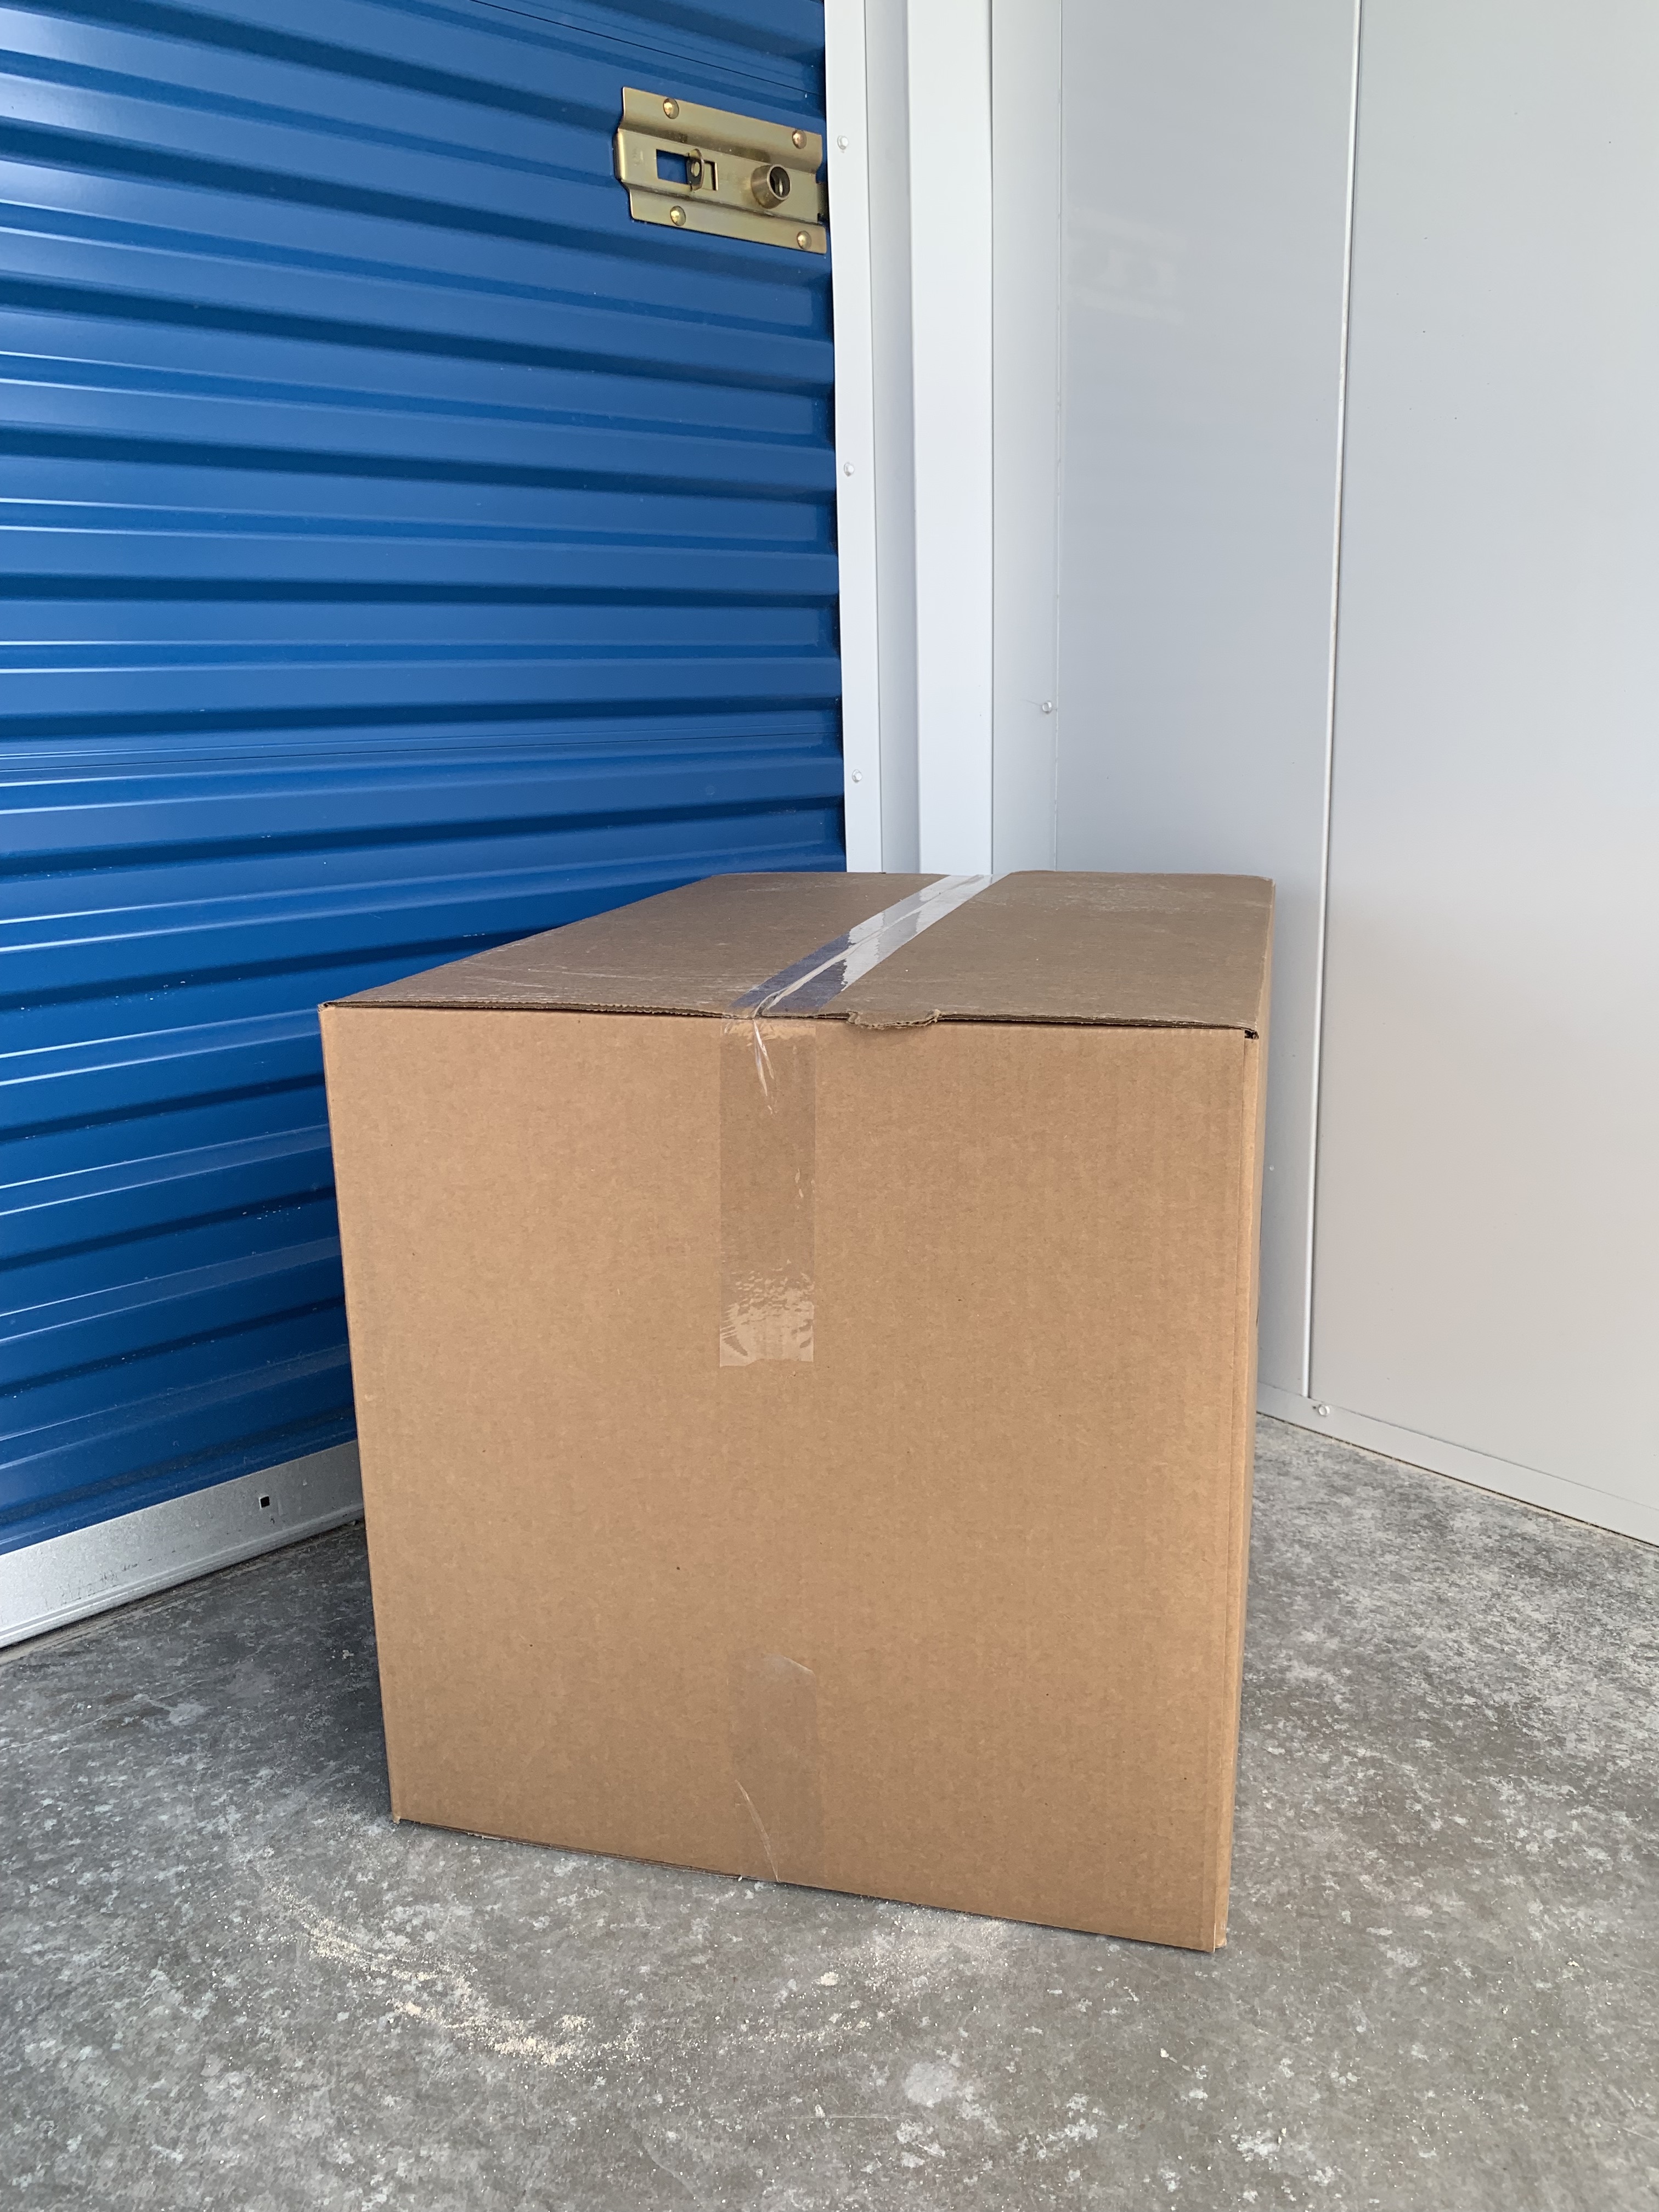 700 Storage - Available Large Sized Boxes